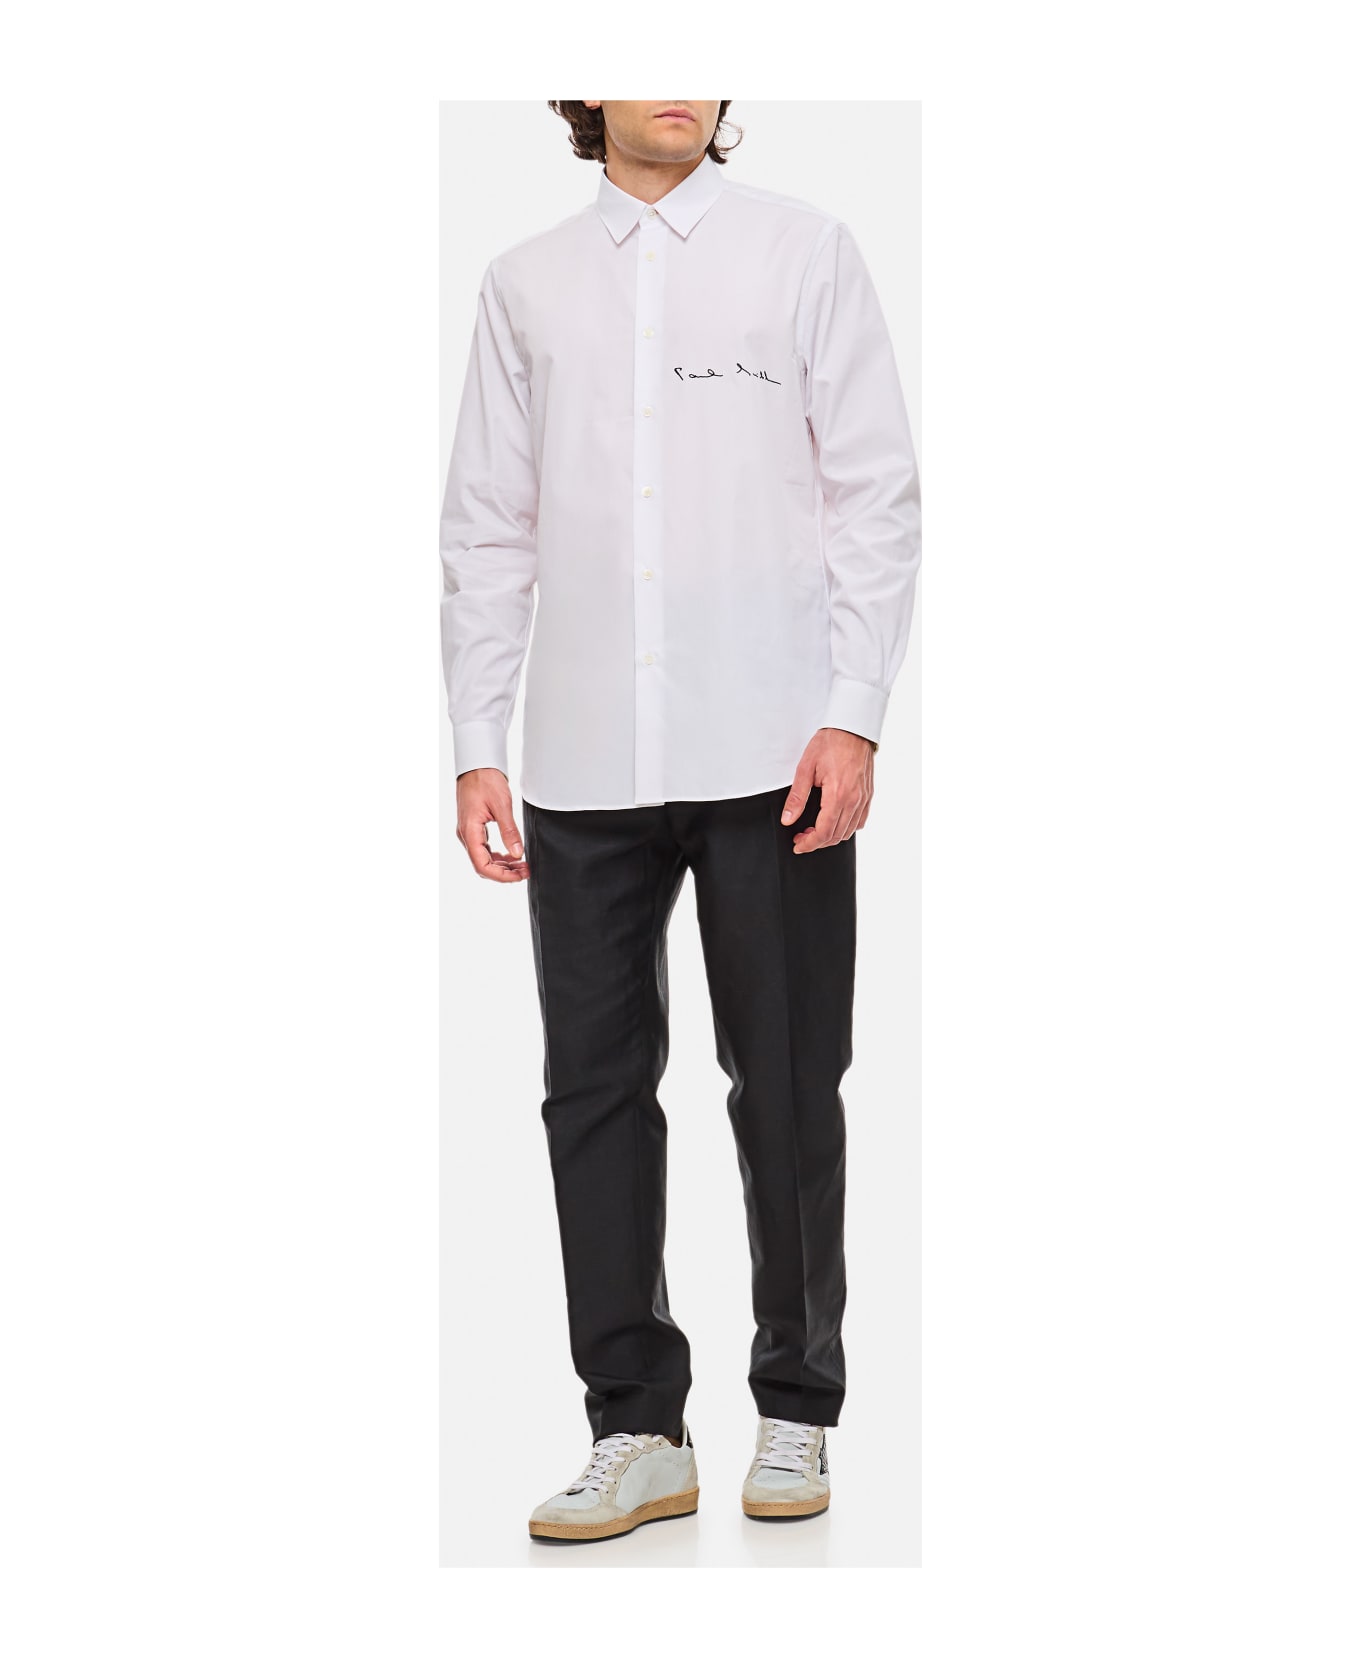 Paul Smith S/c Regular Fit Shirt - White